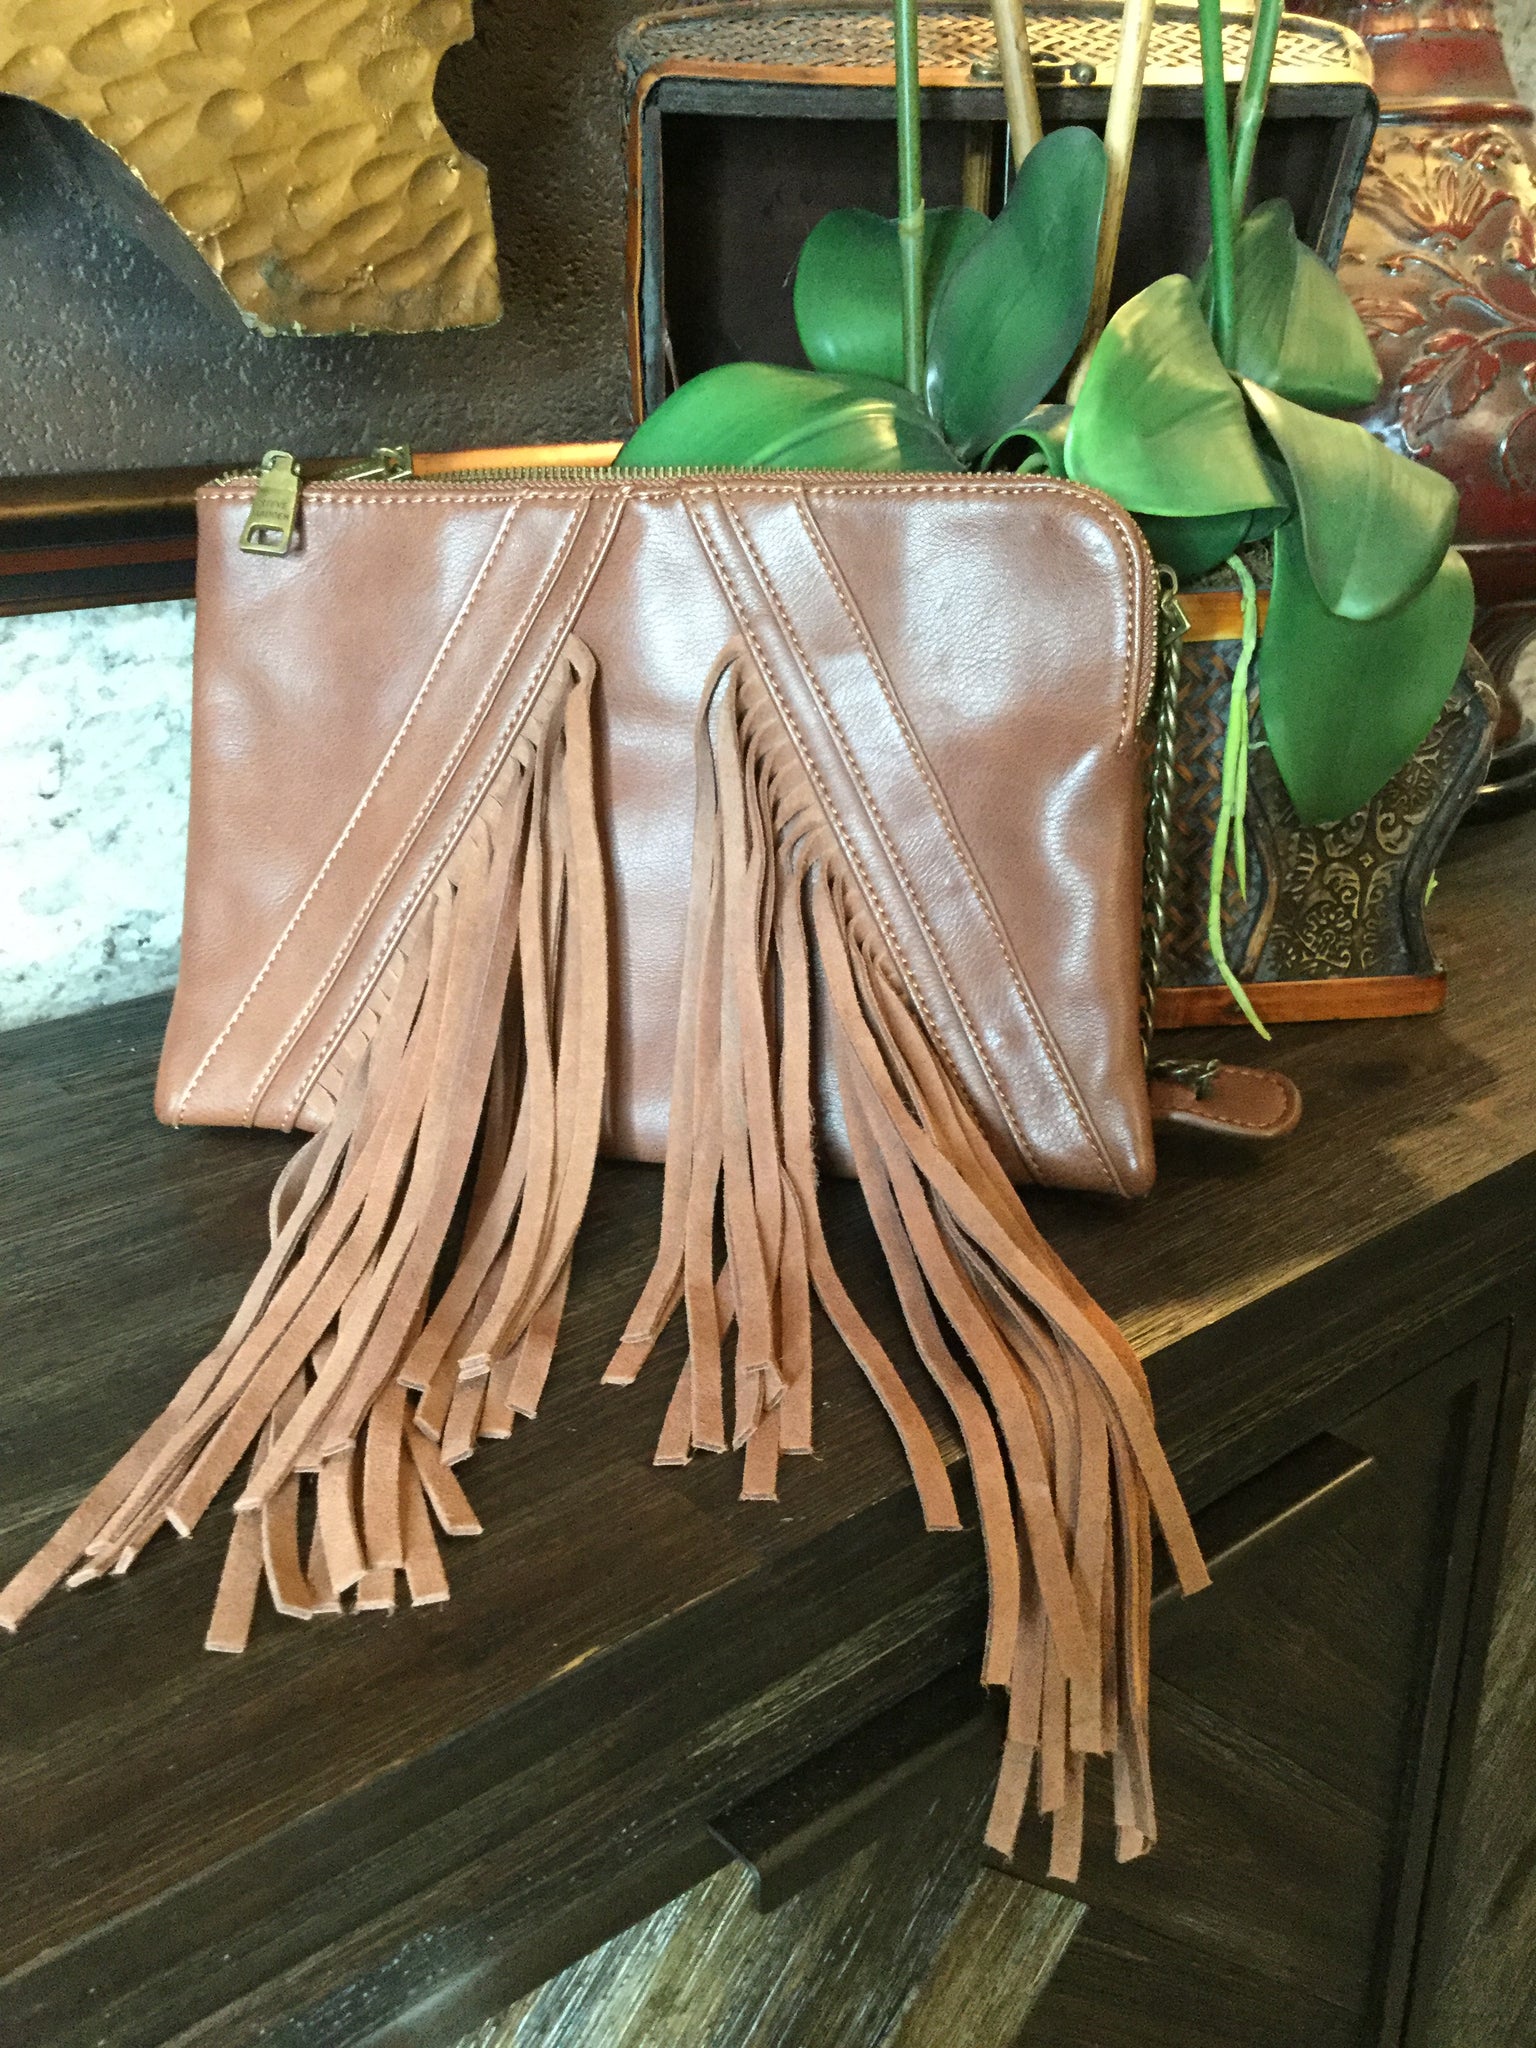 Brown leather trim handbag